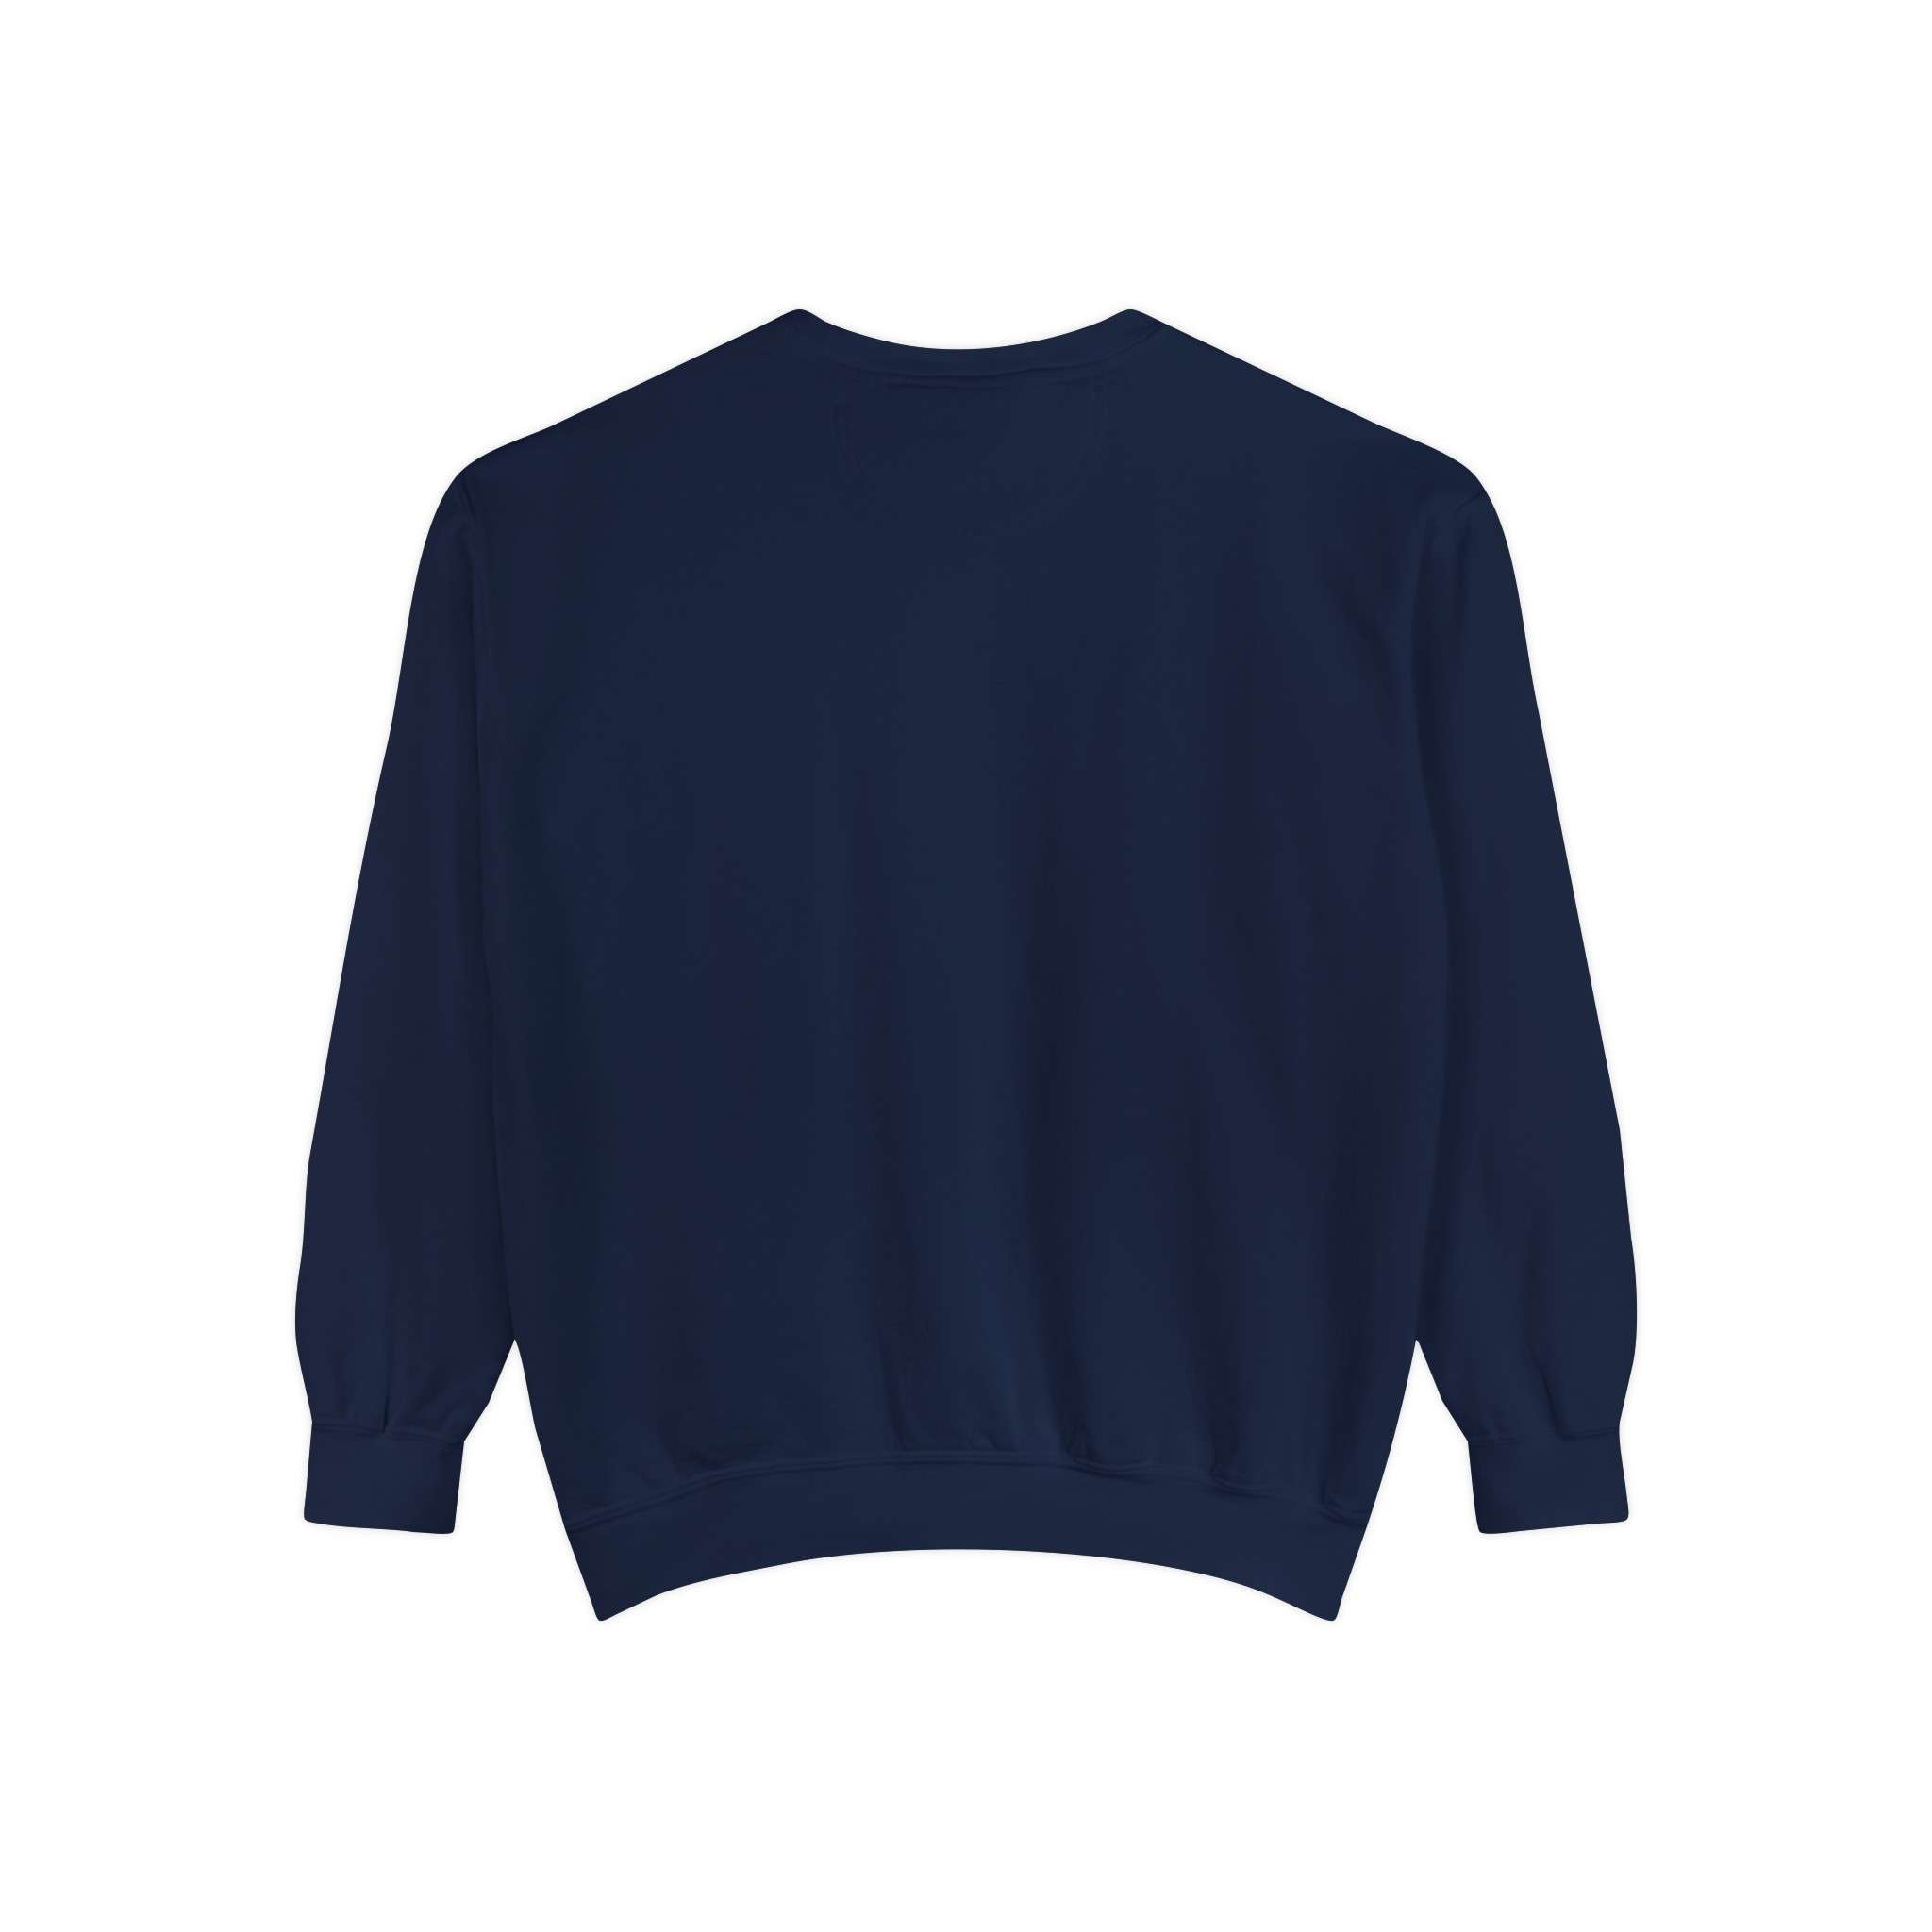 Toji Zenin Stylized Unisex Garment-Dyed Sweatshirt